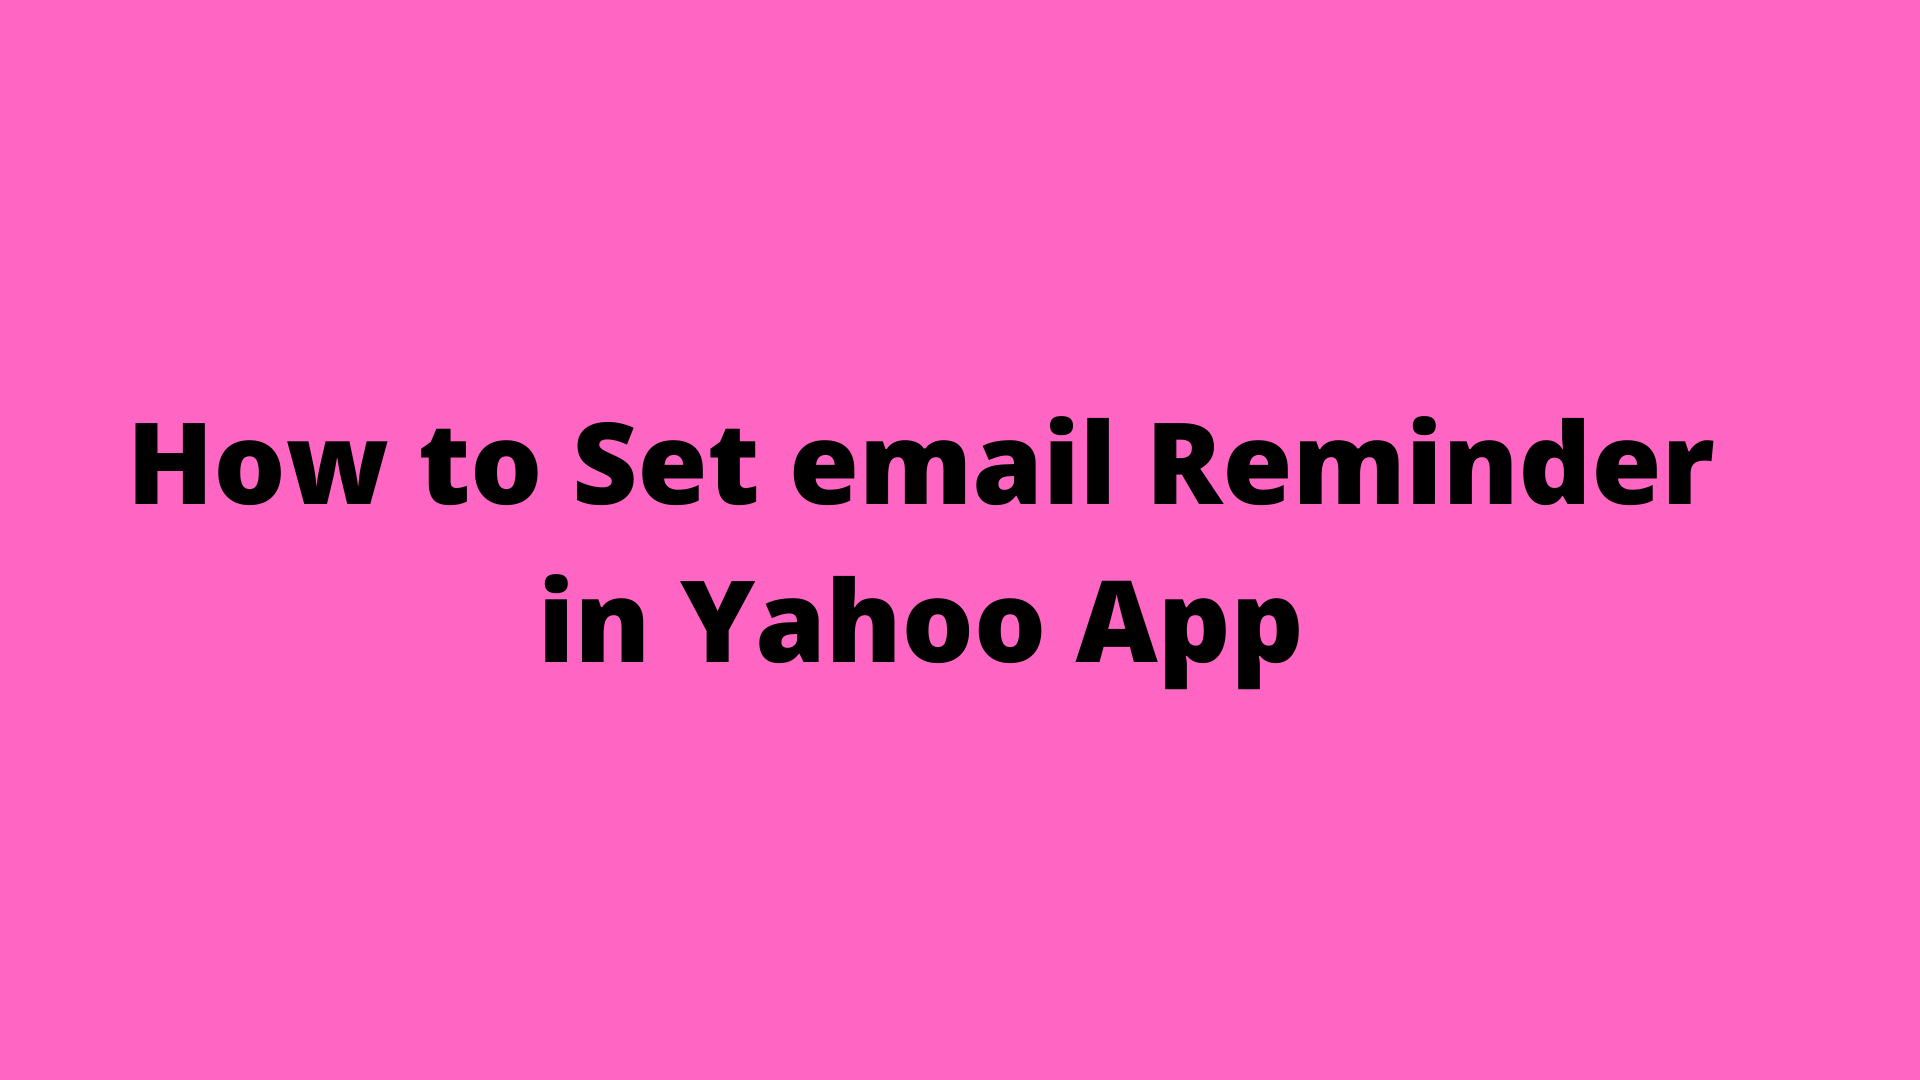 Set email Reminder in Yahoo App